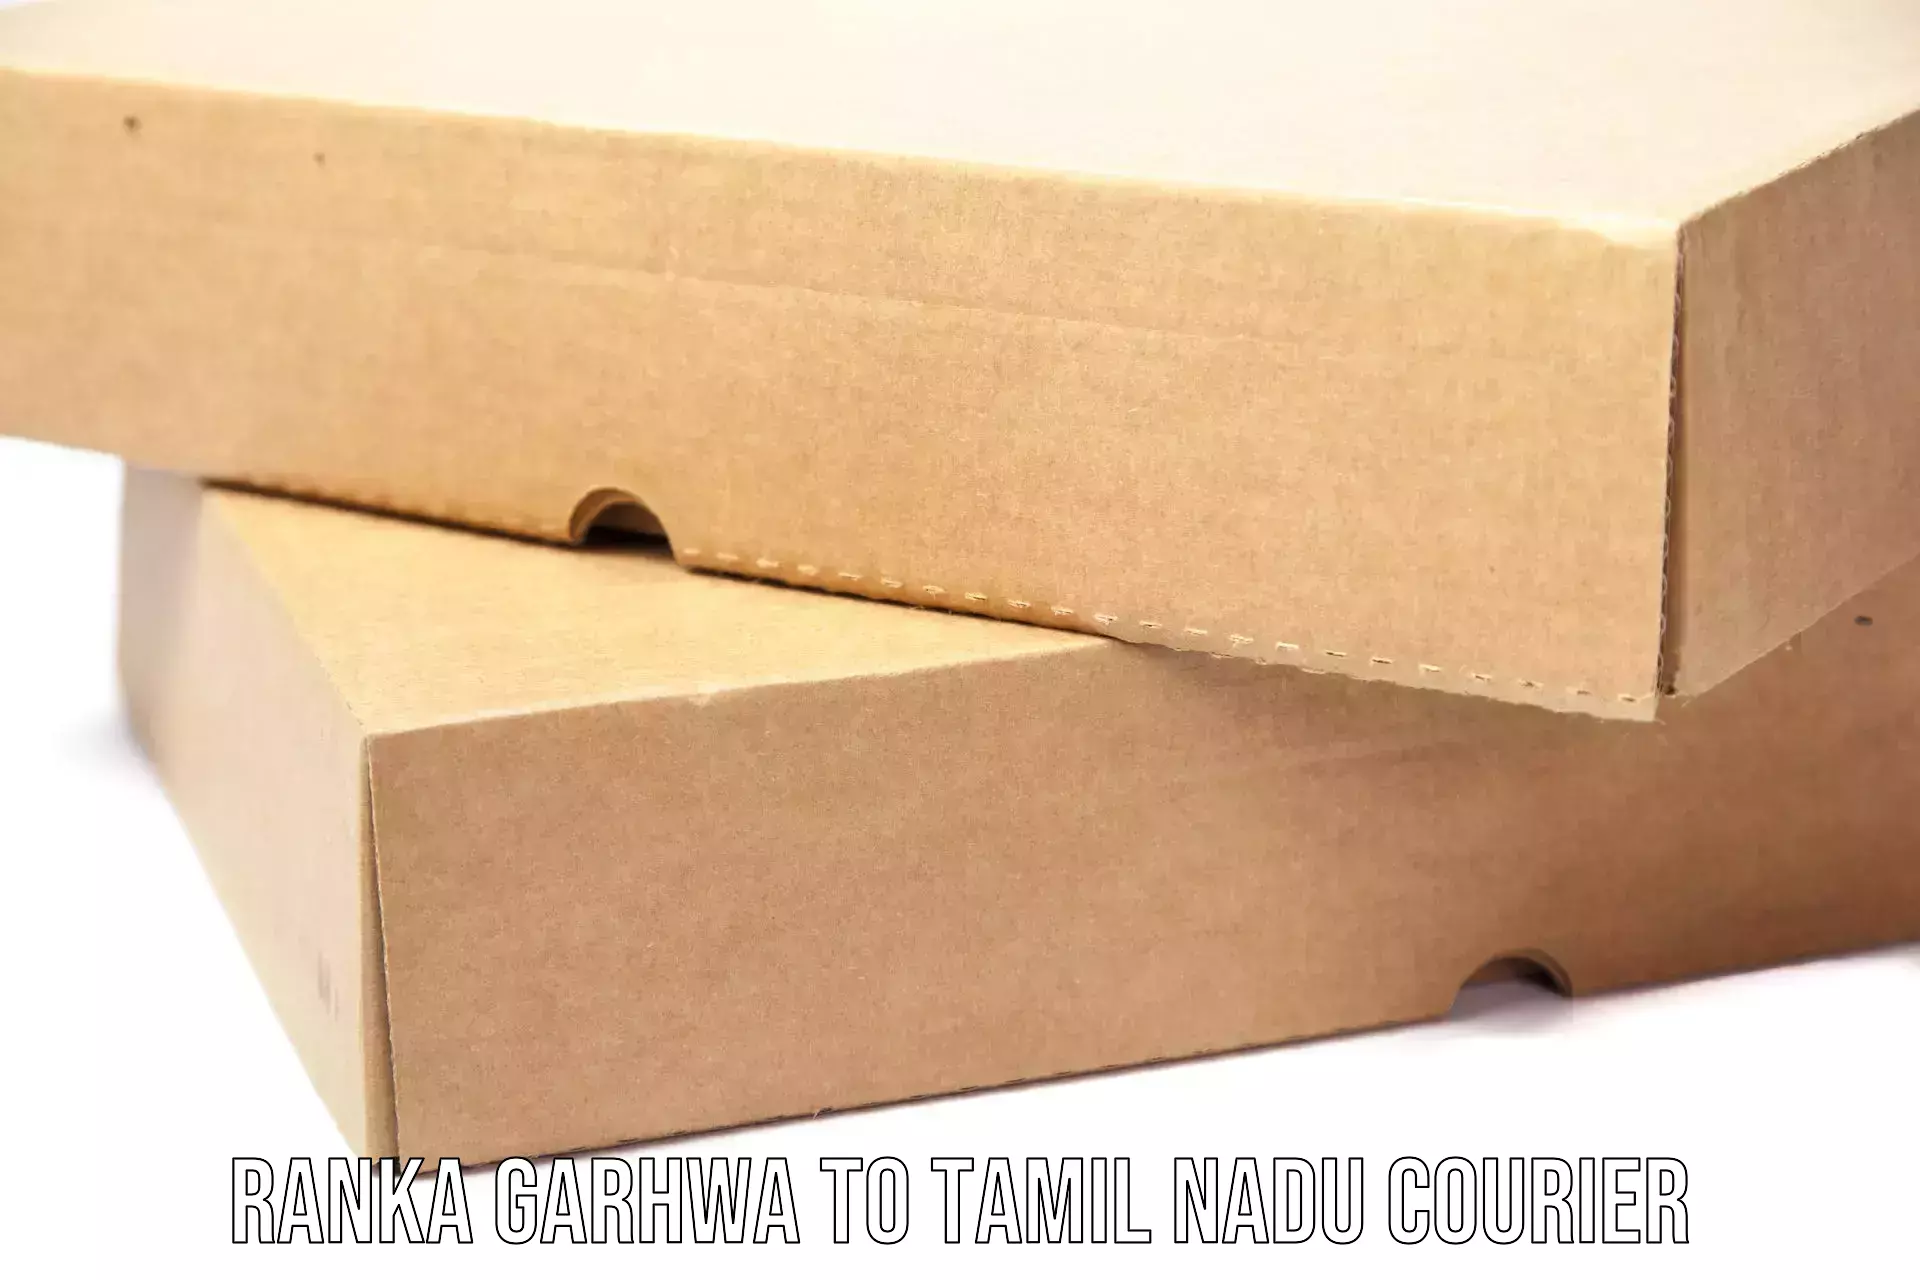 Efficient shipping operations Ranka Garhwa to Tamil Nadu